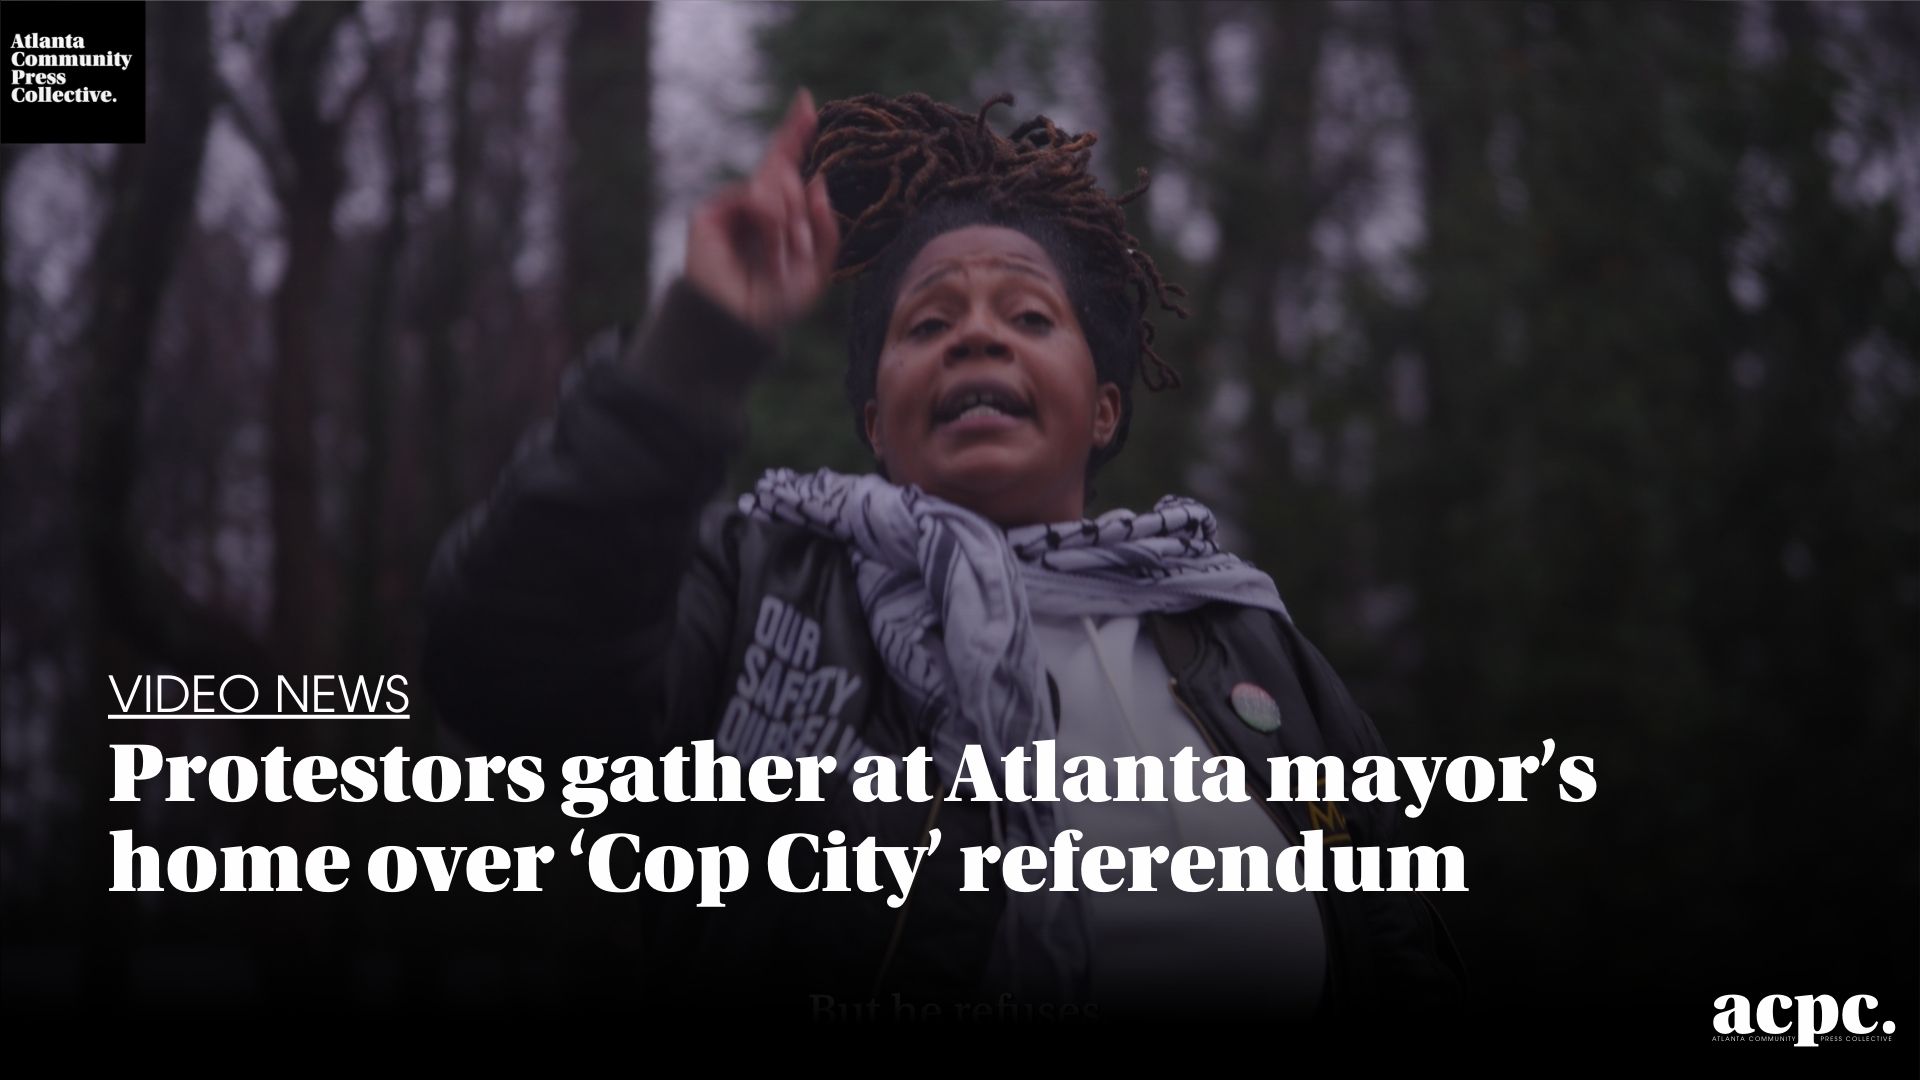 Protestors gather at Atlanta mayor’s home over ‘Cop City’ referendum